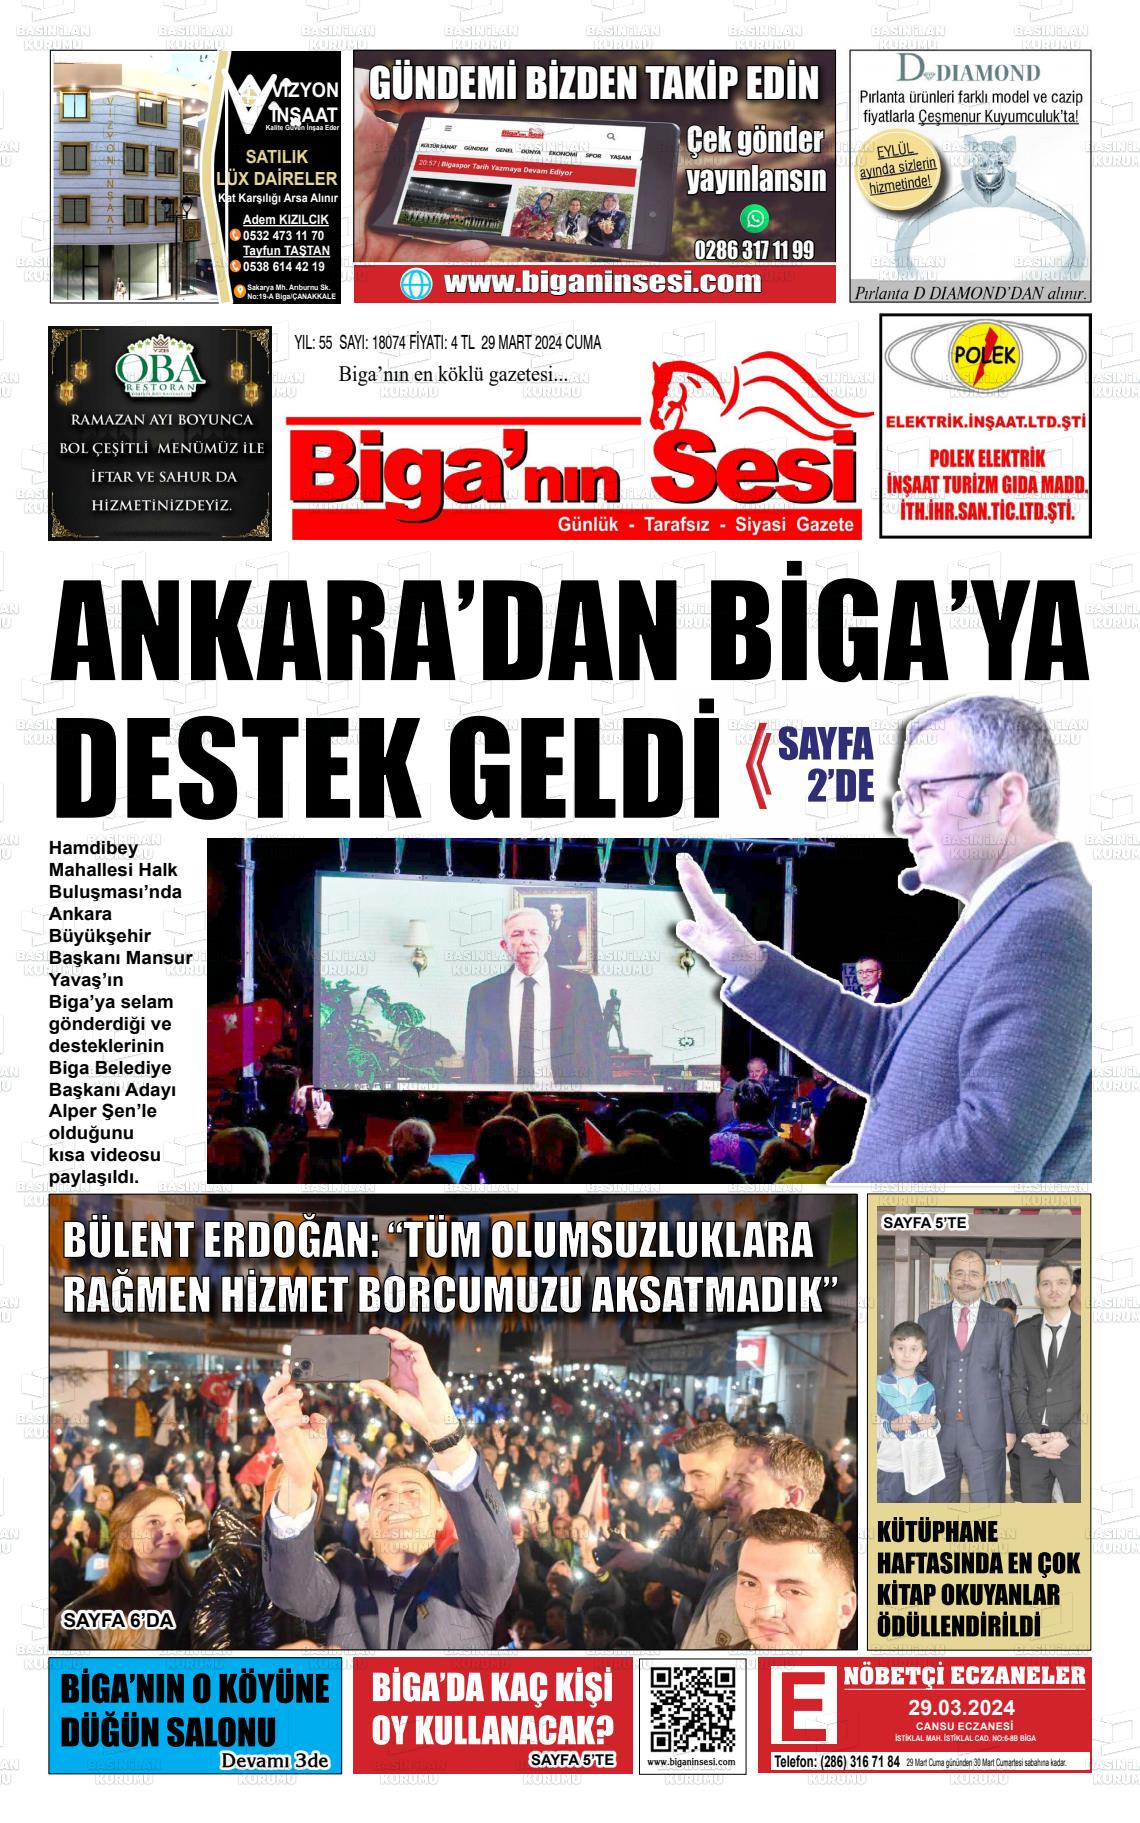 29 Mart 2024 Biga'nın Sesi Gazete Manşeti